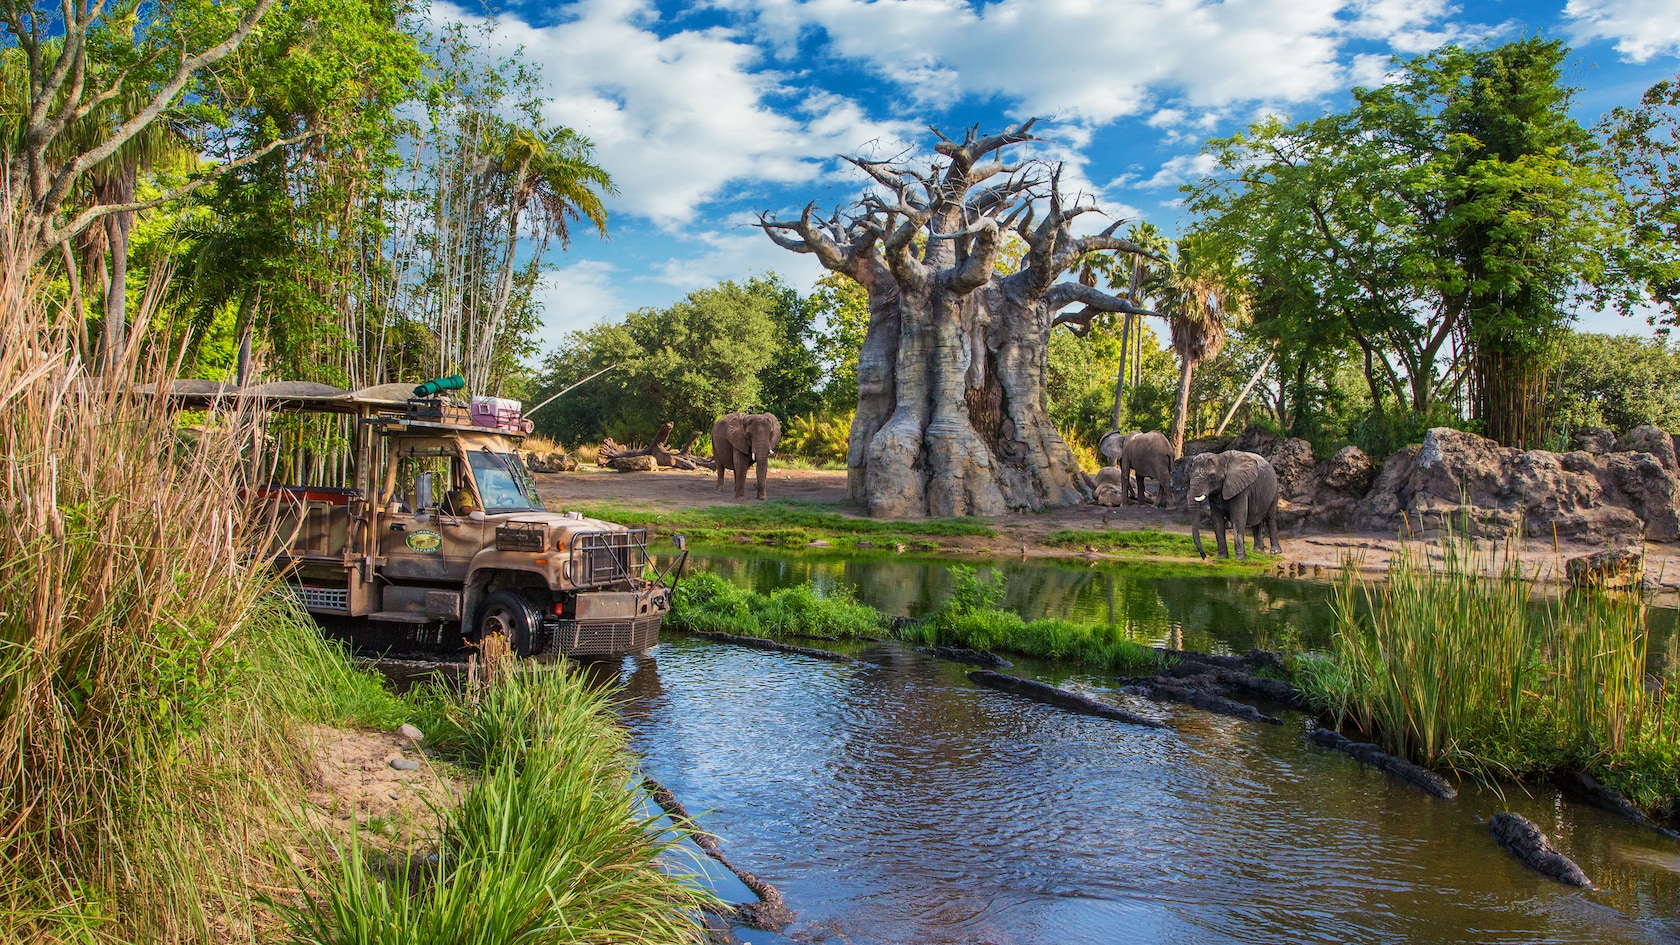 An open-air safari bus drives in a river past 3 elephants 